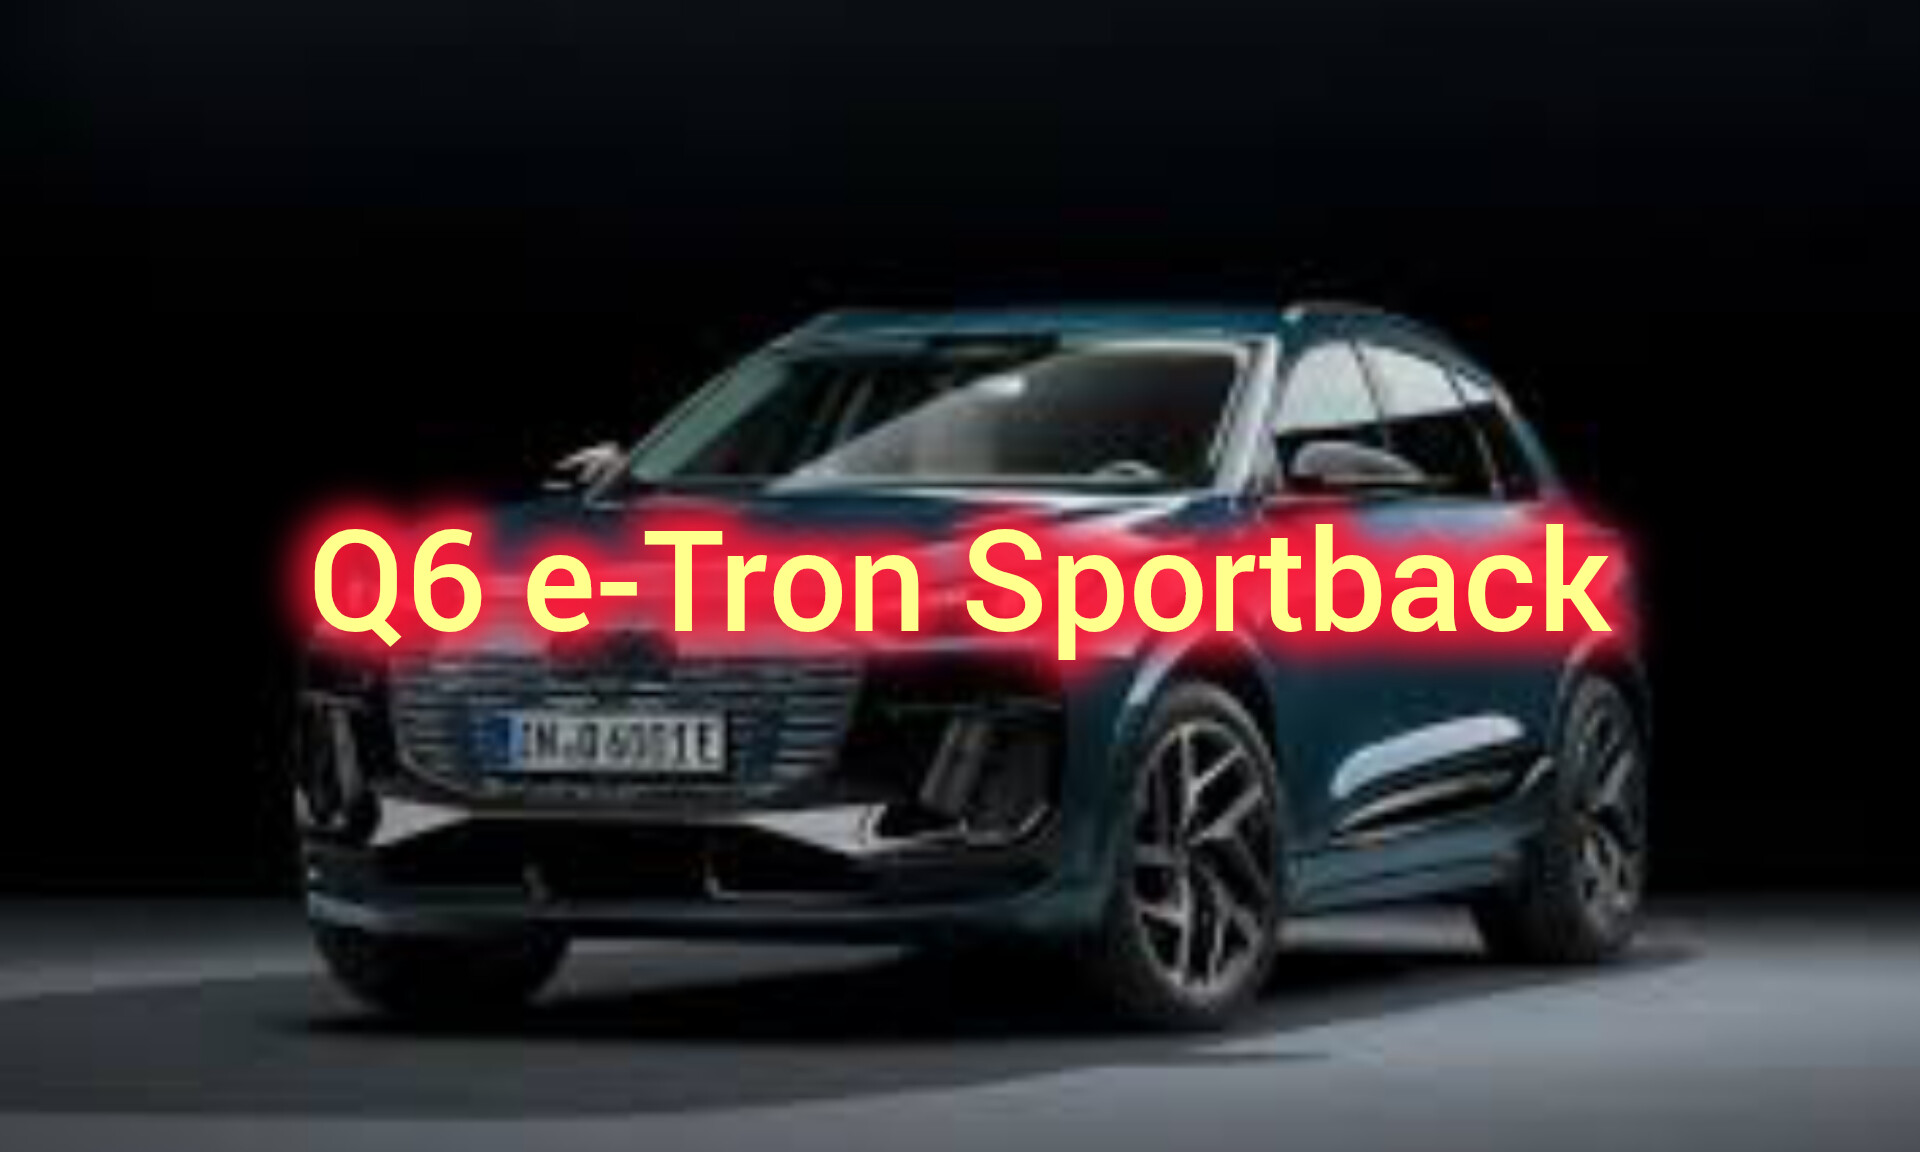 Mobil Listrik Audi Q6 e-Tron Sportback Hadir Awal 2025, Sematkan Baterai 100kWh dan Jarak Tempuh Hingga 641km